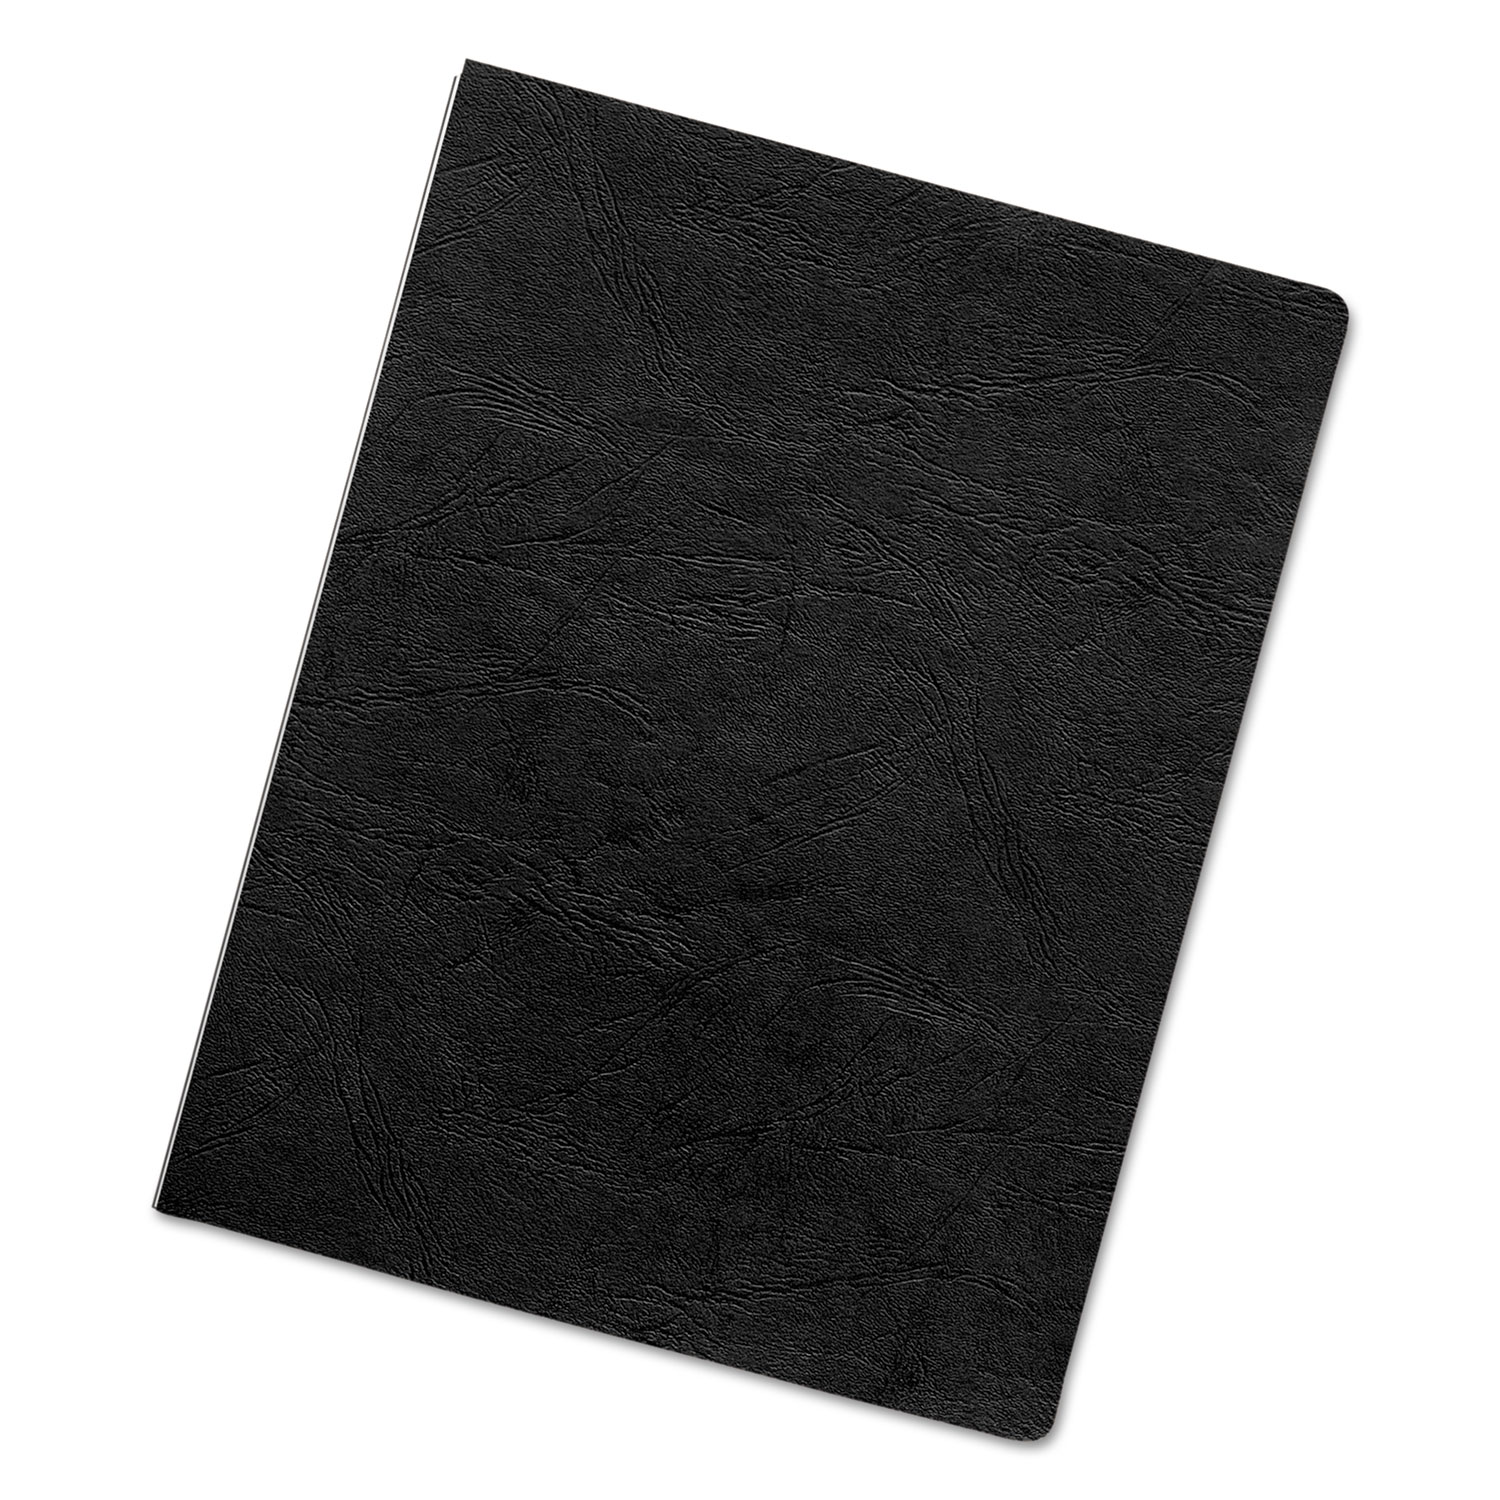  Fellowes 52146 Executive Leather-Like Presentation Cover, Round, 11-1/4 x 8-3/4, Black, 50/PK (FEL52146) 